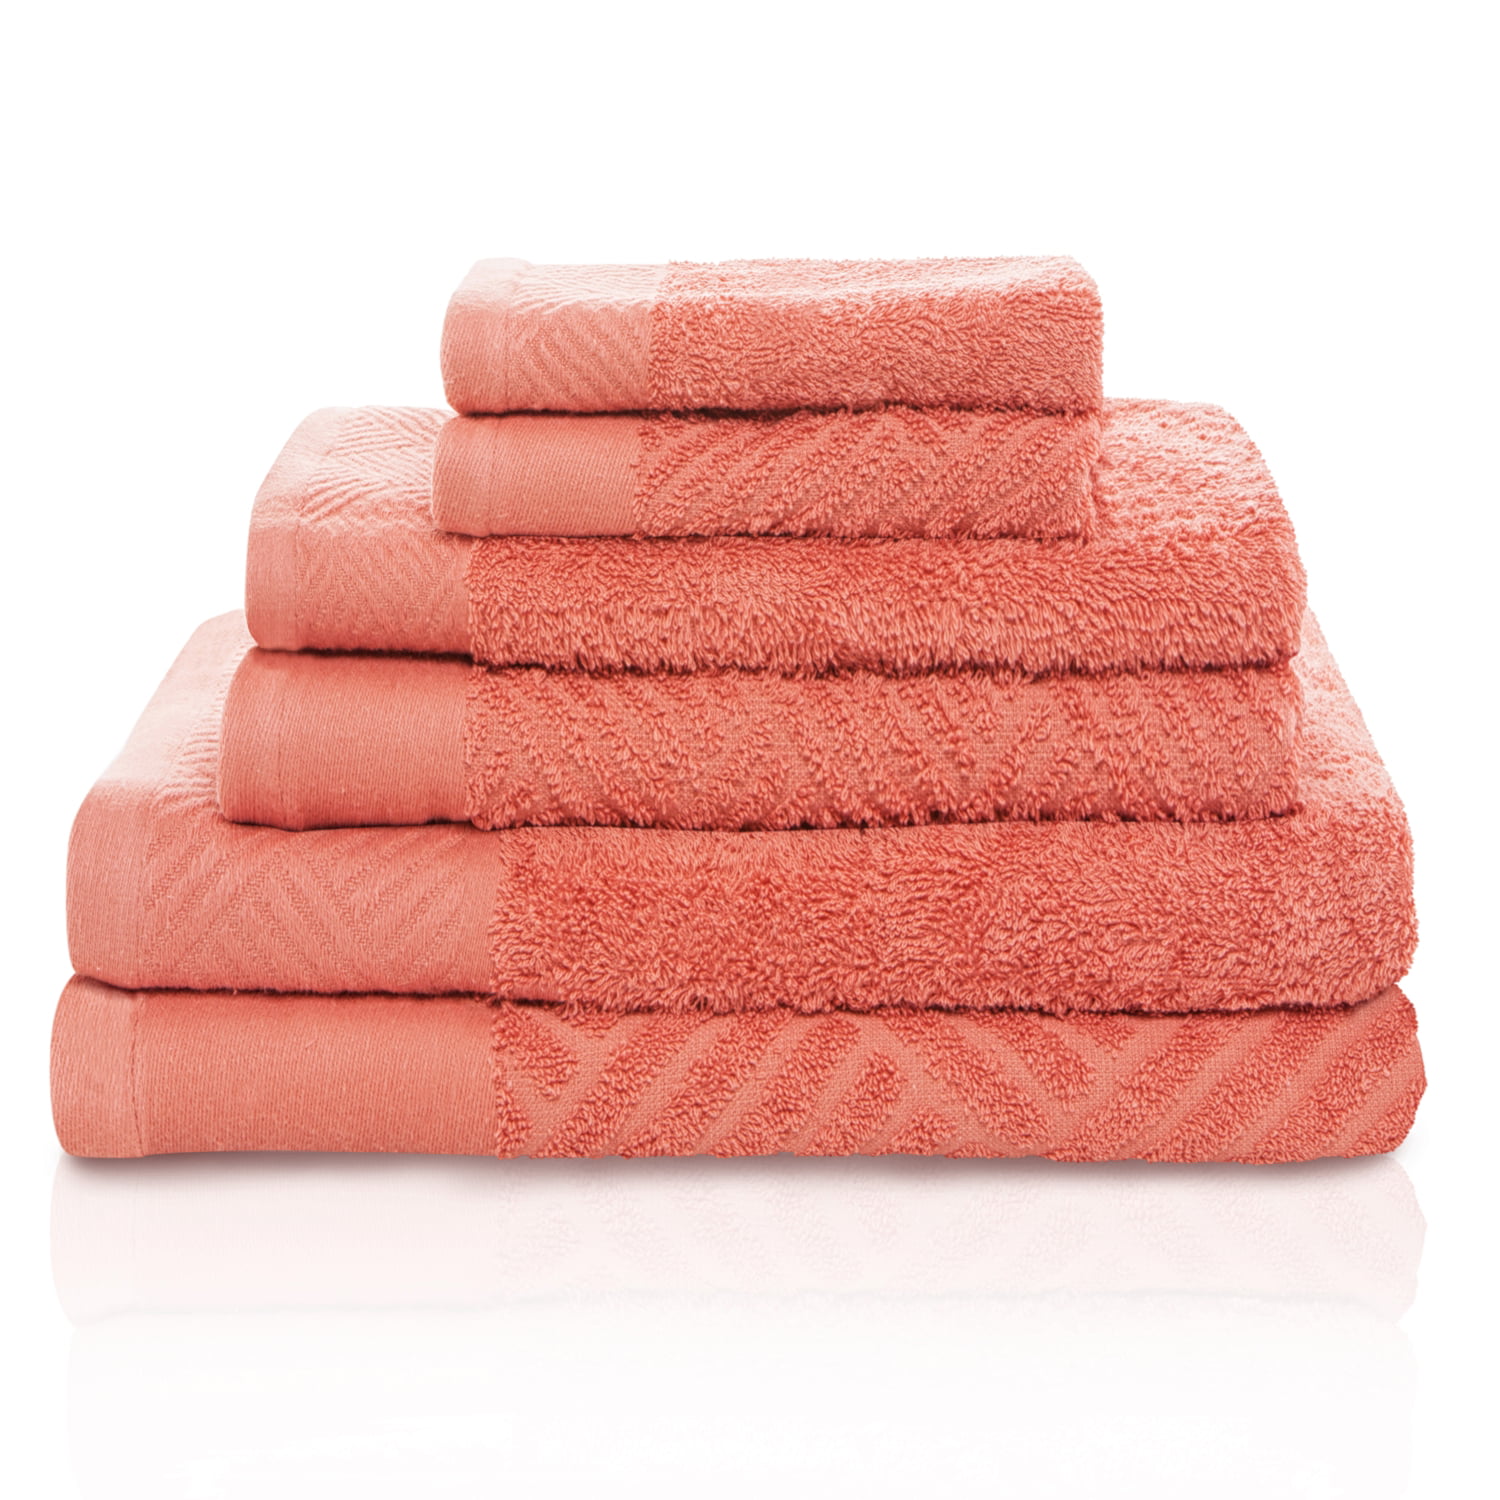 Superior Marche Egyptian Cotton Bath Towel - Set of 2 - On Sale